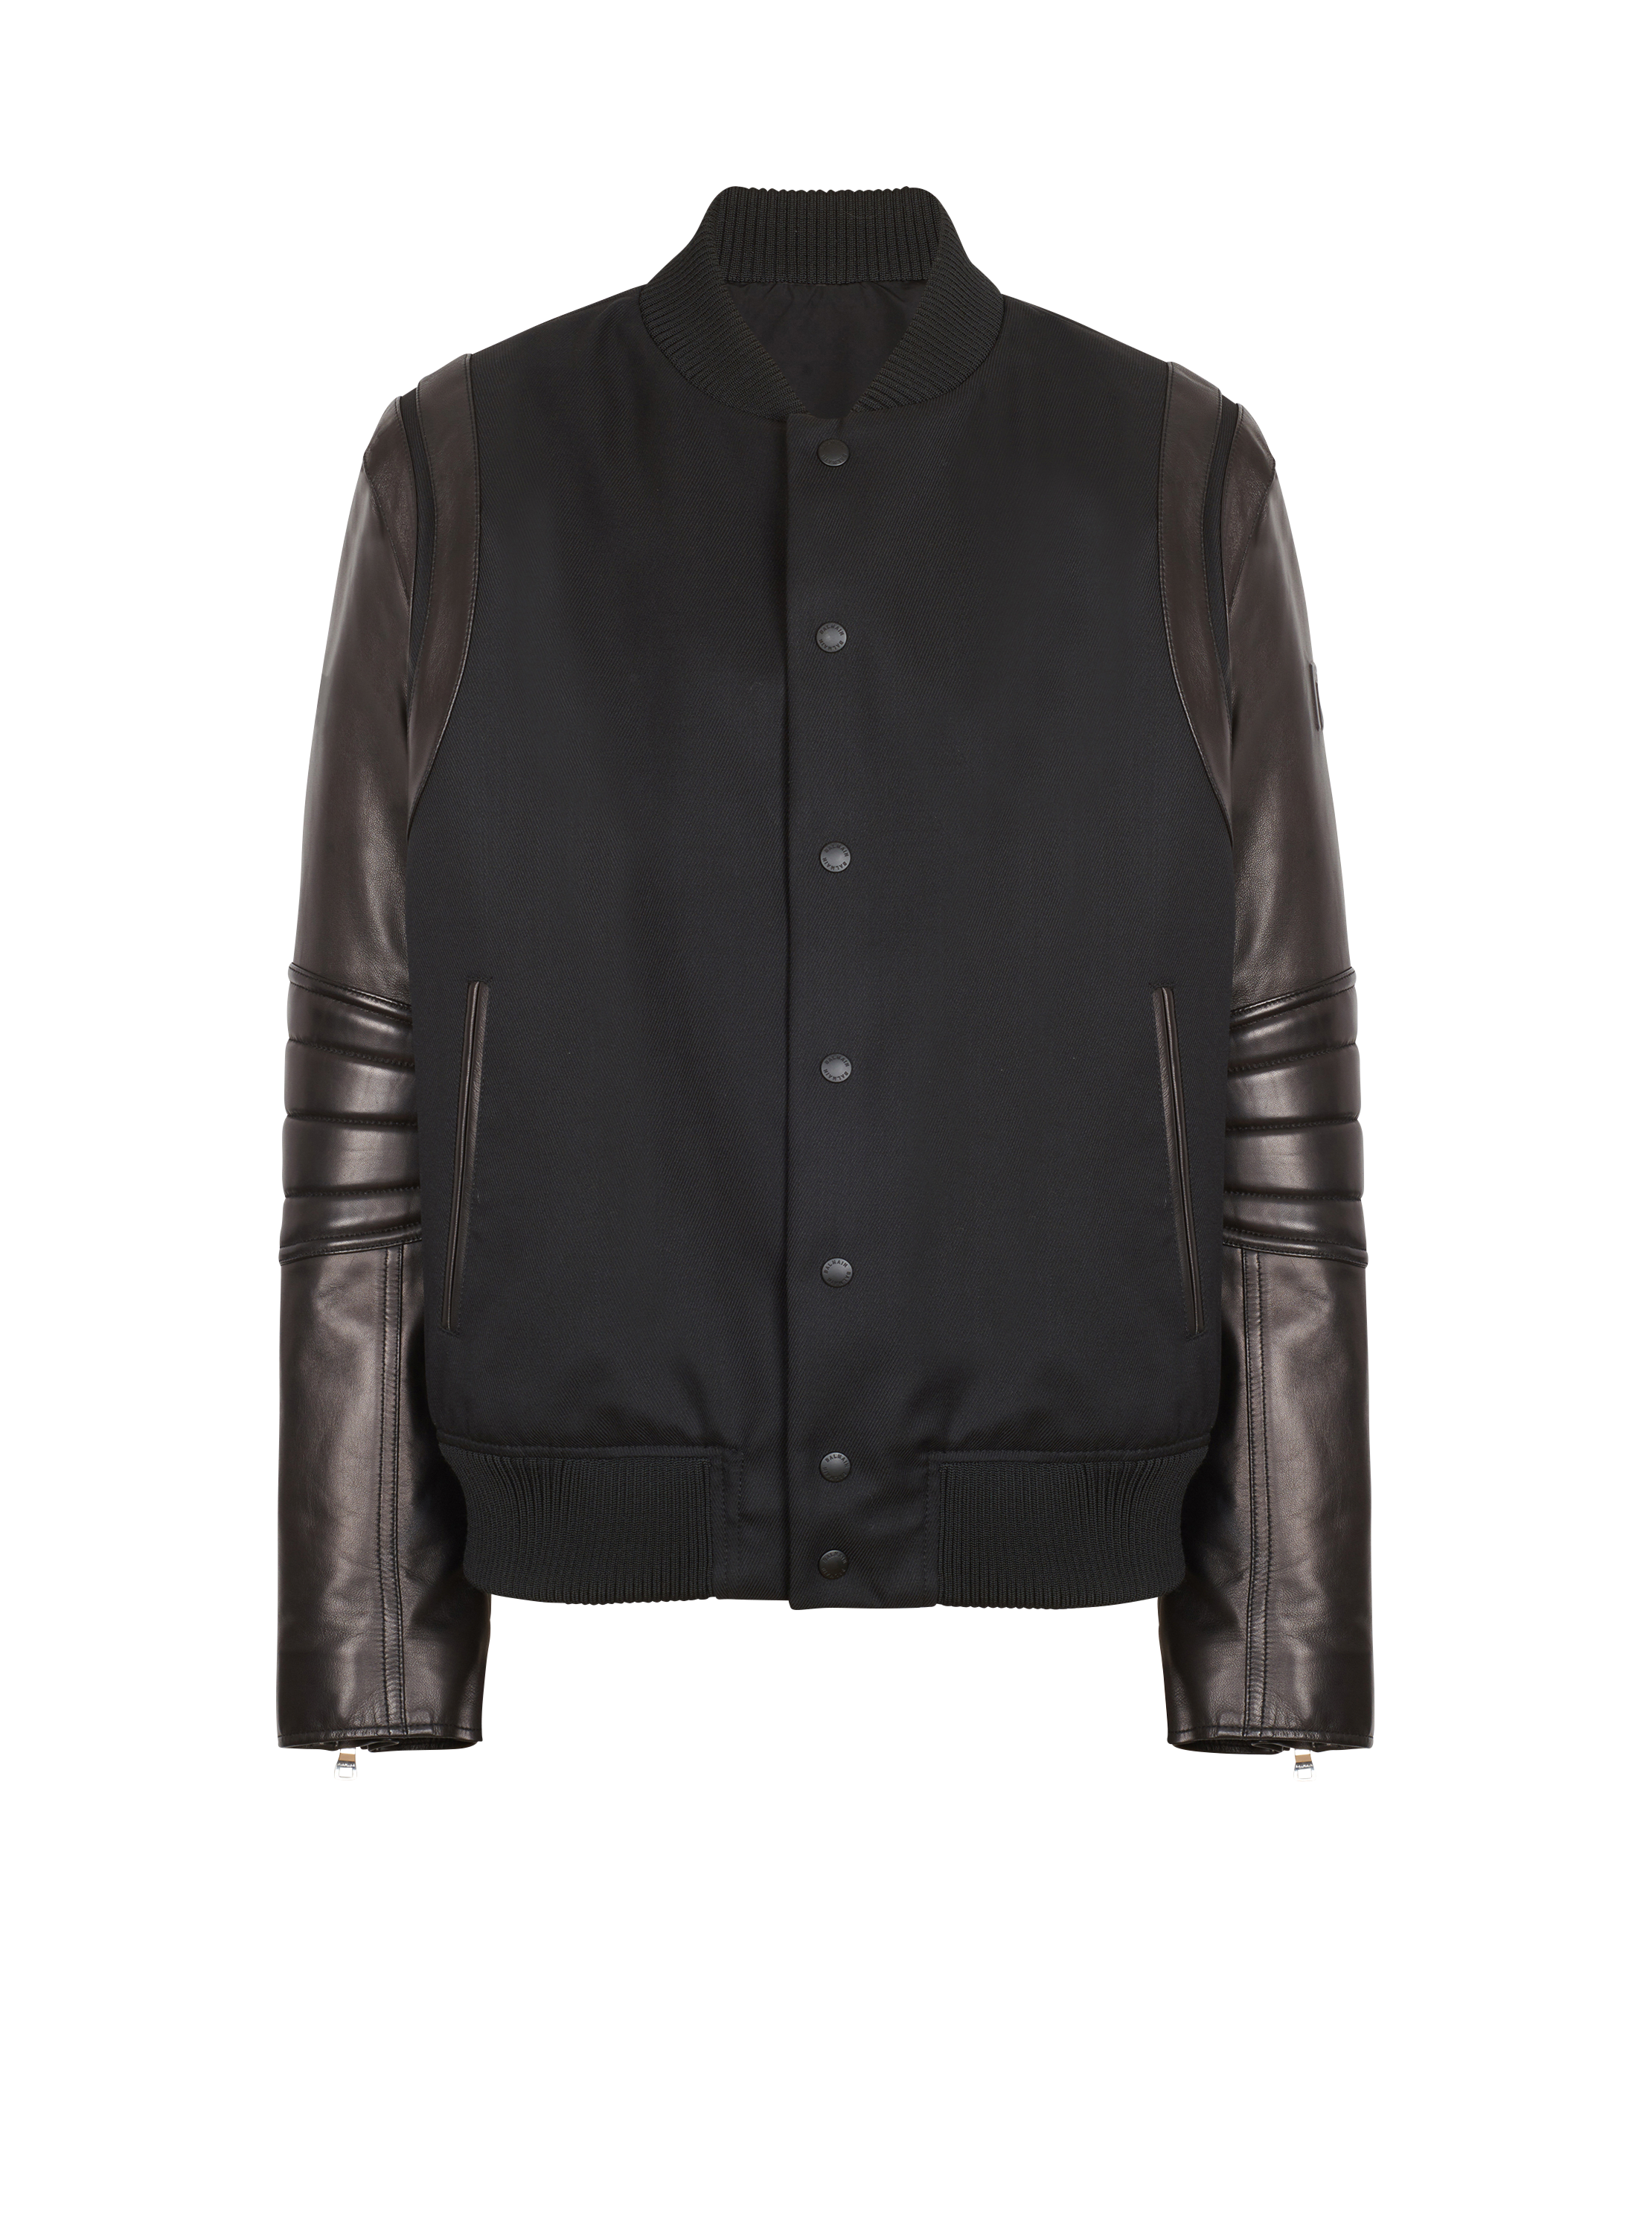 Wool and leather varsity jacket